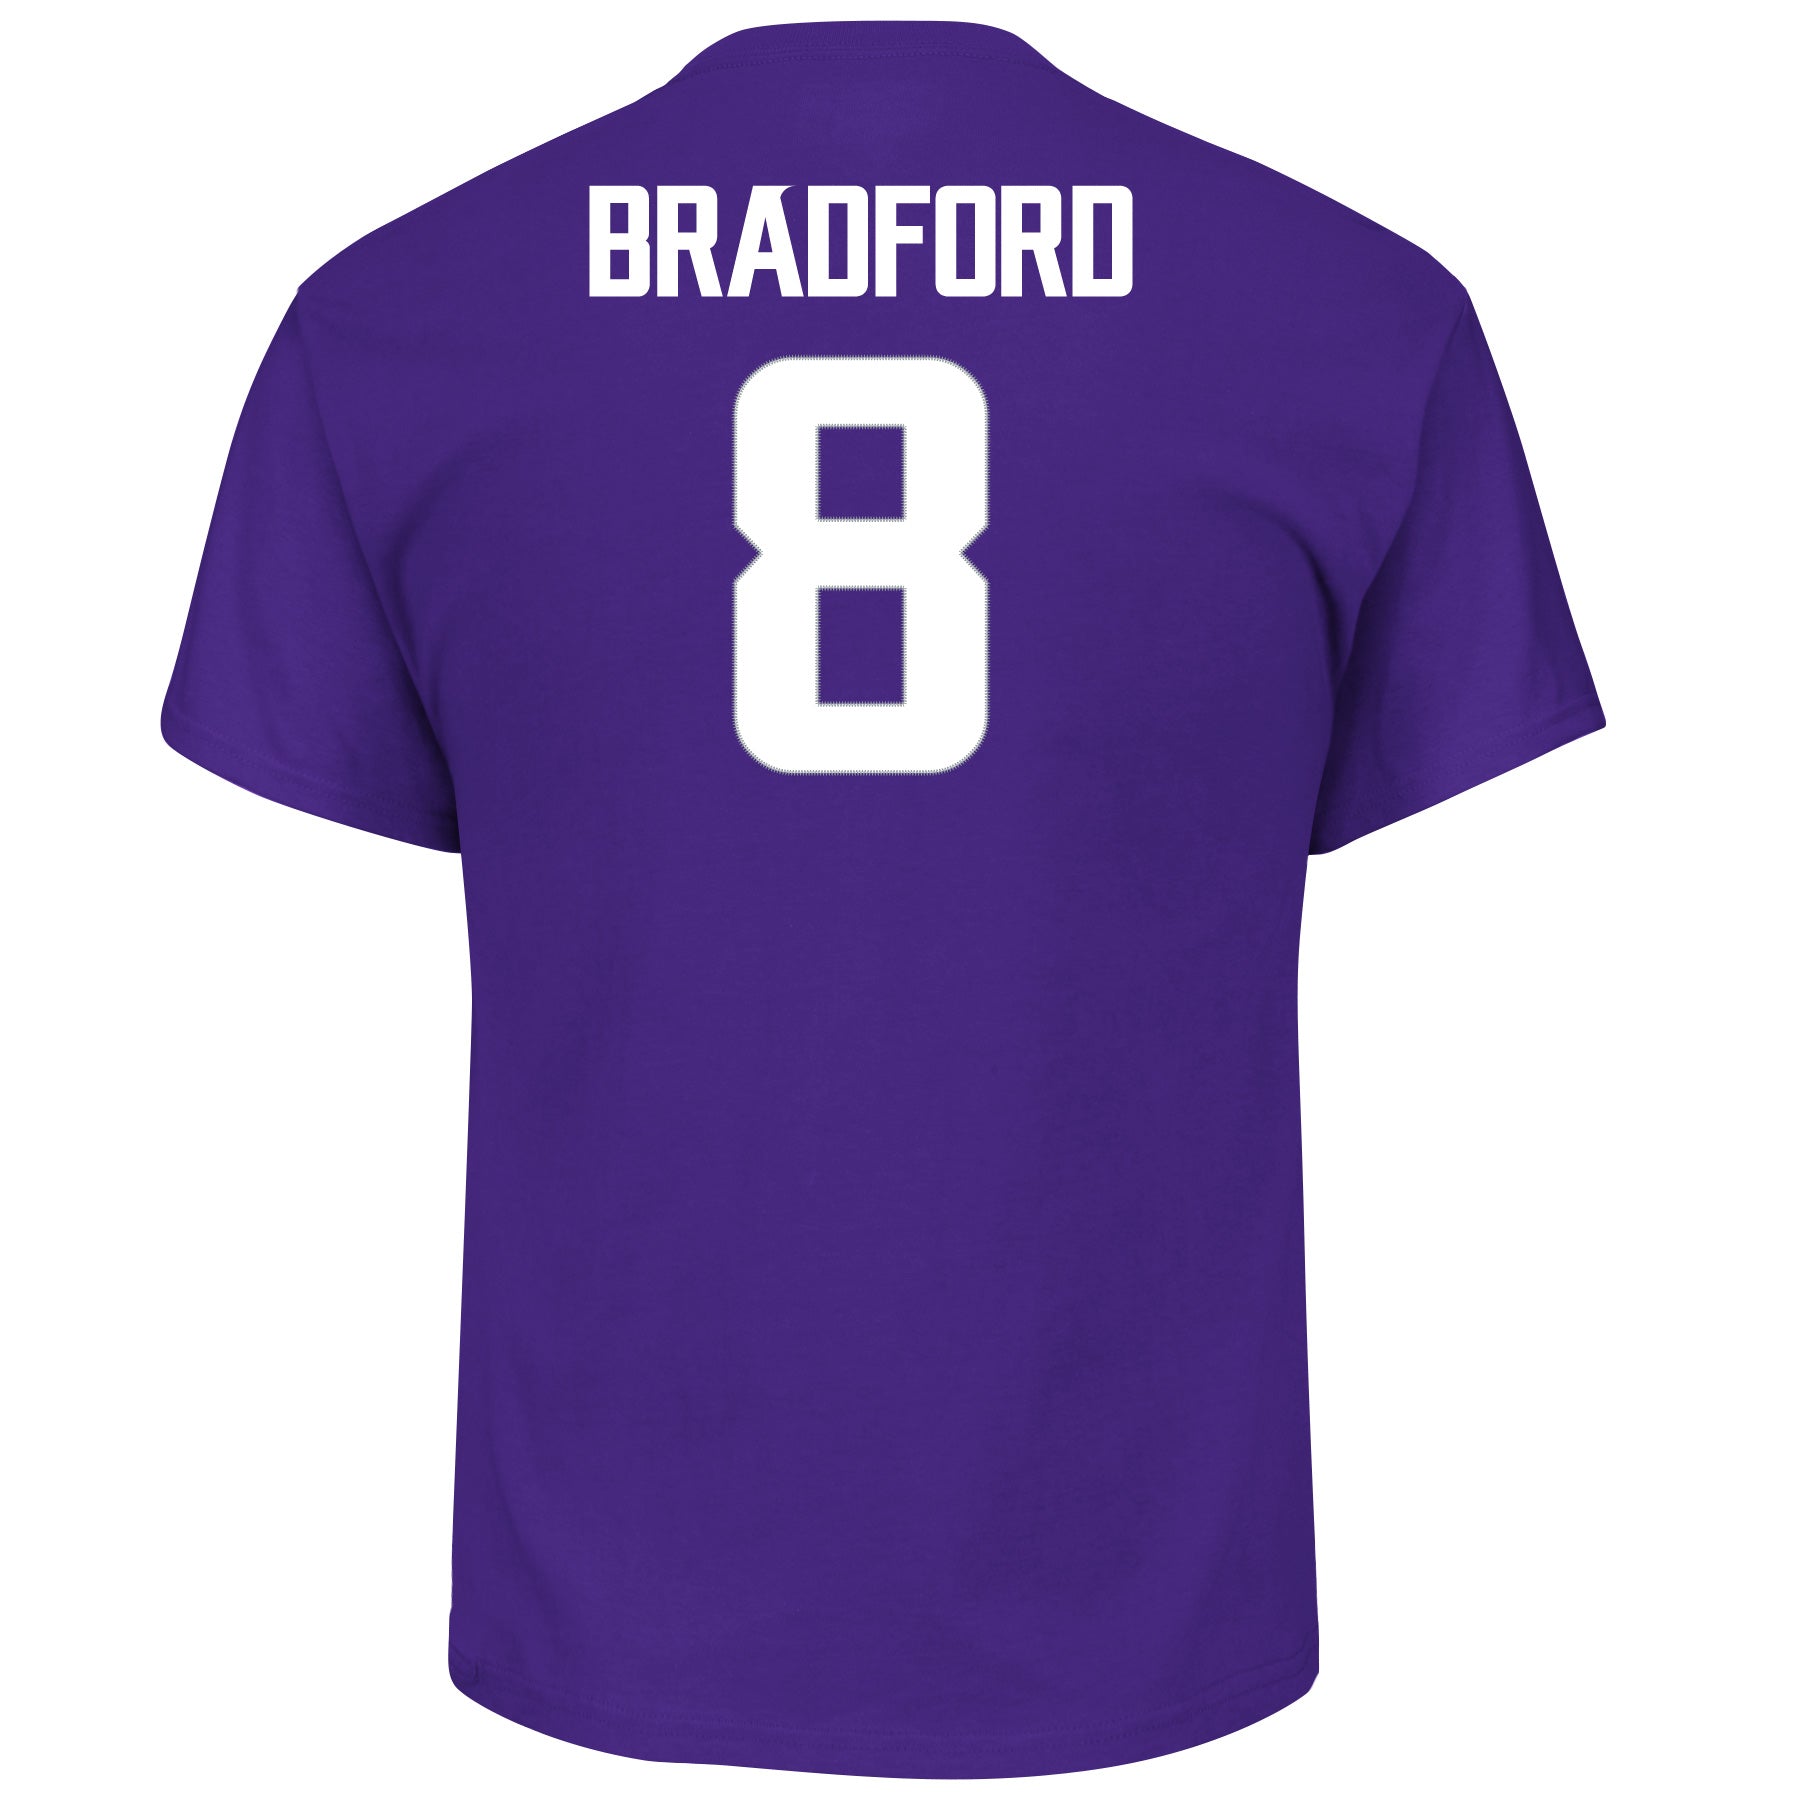 bradford vikings shirt